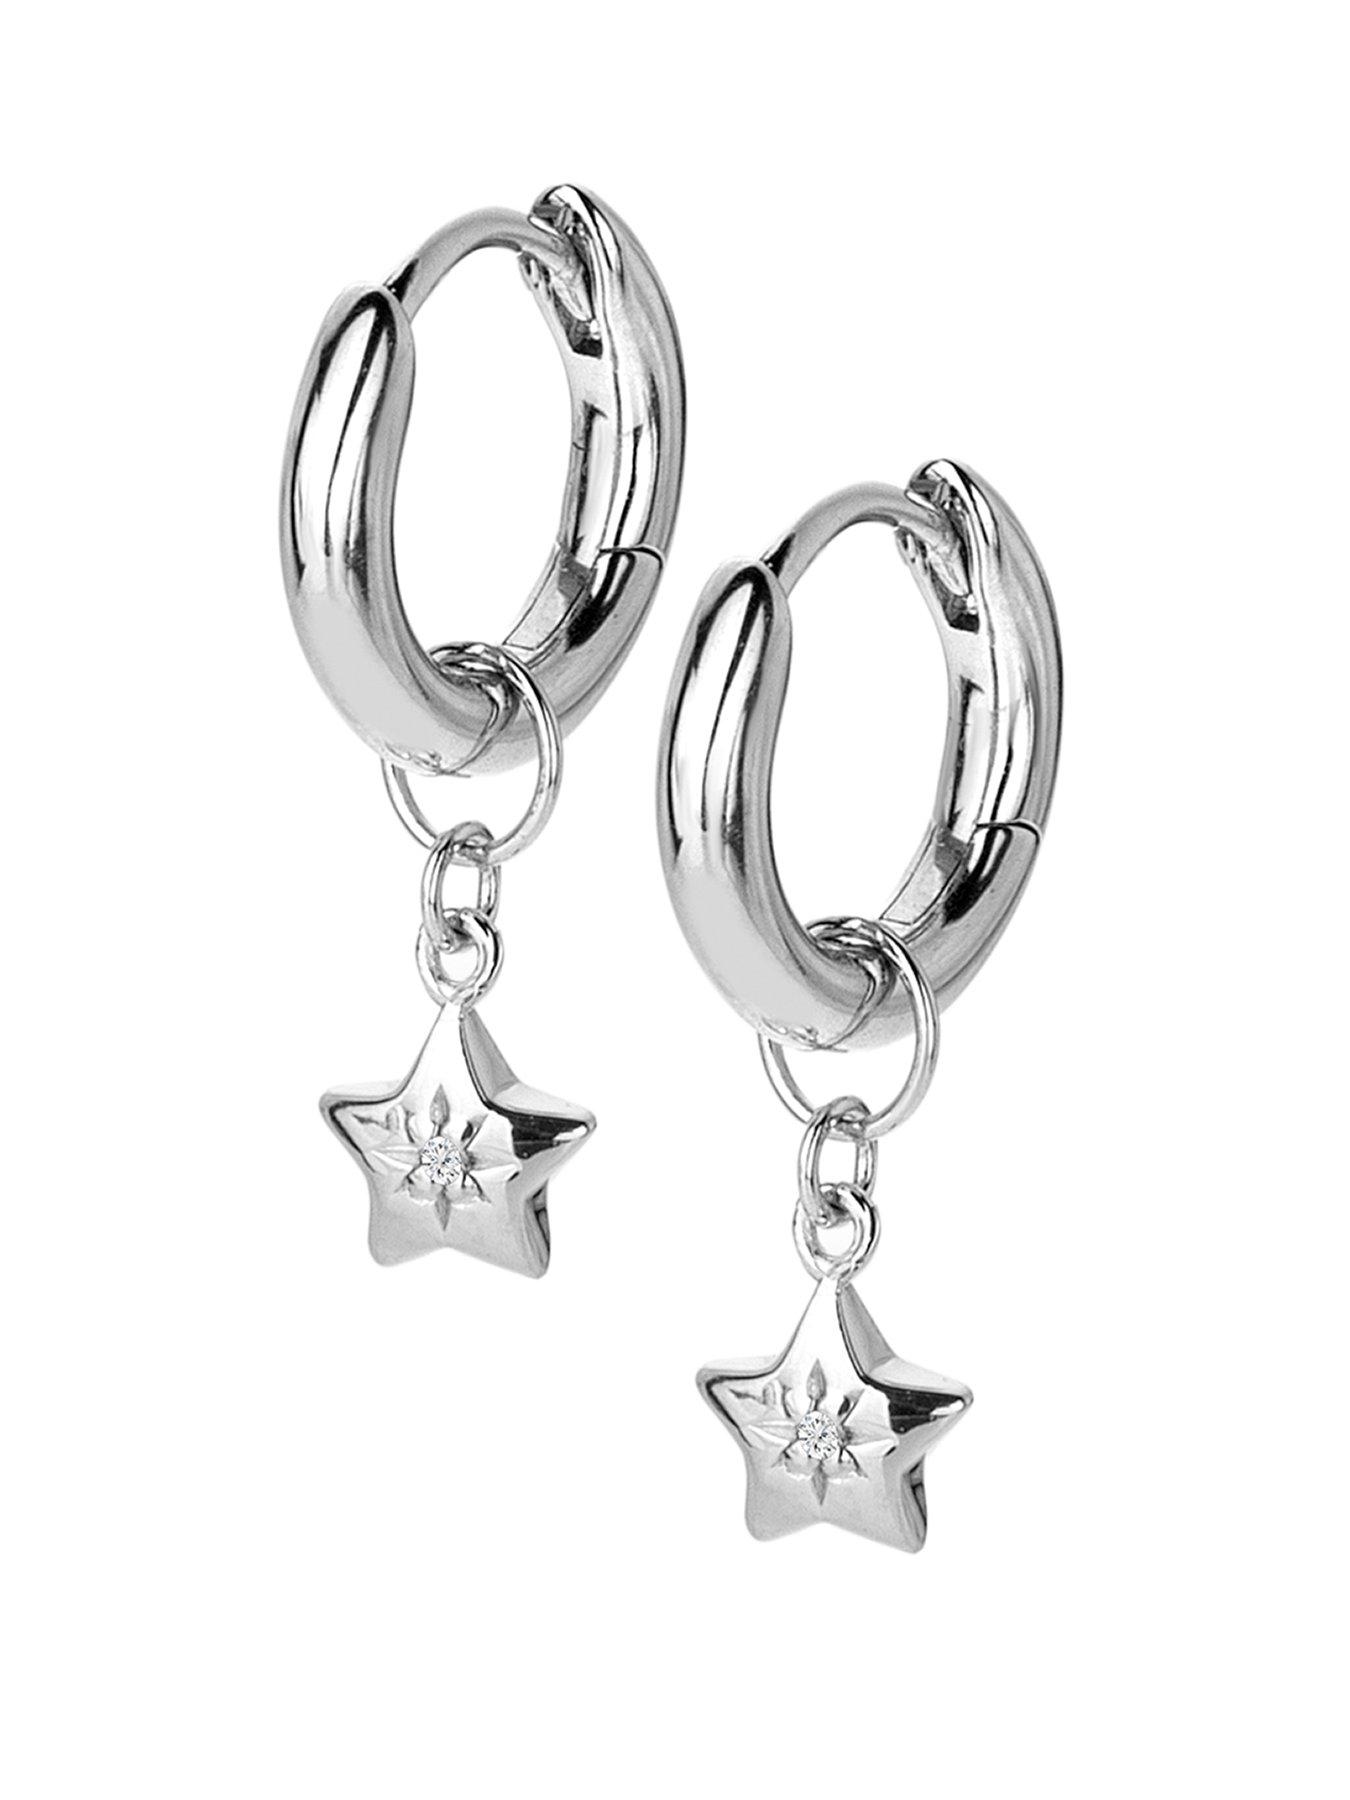 10 Pieces 925 Sterling Silver Earring Hook 30 Mm Long V Shape 